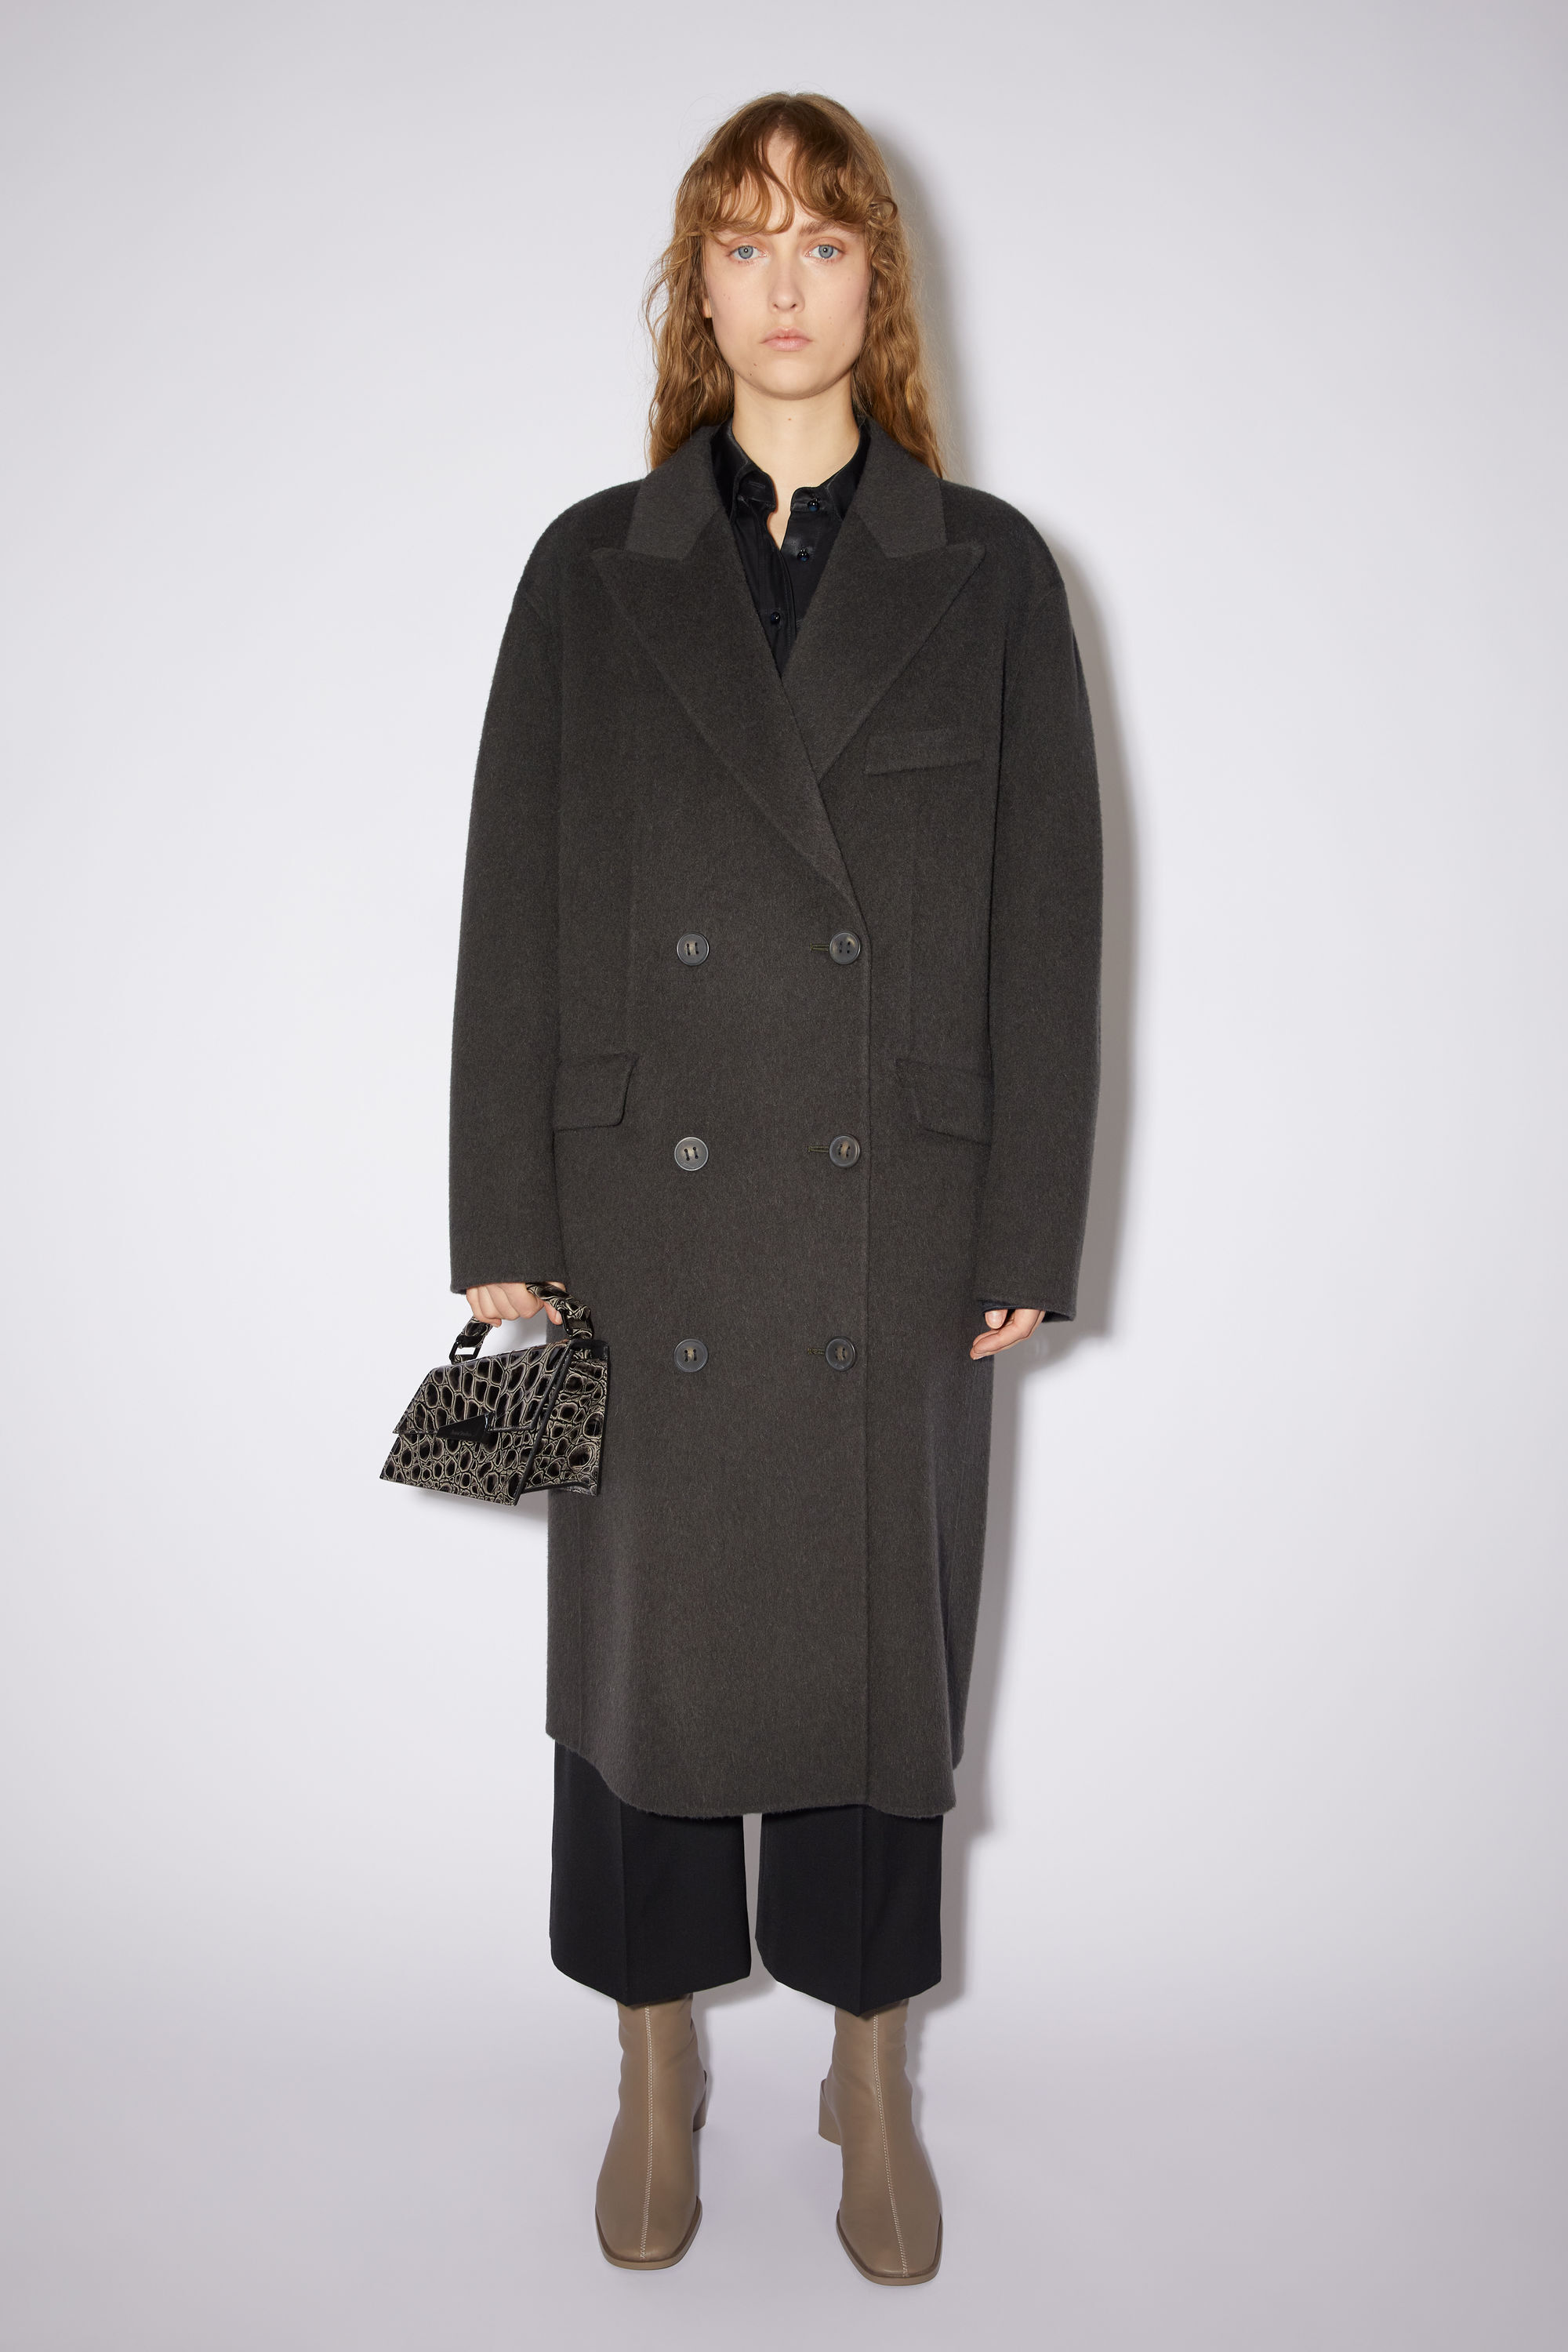 Acne Studios – Women's coats